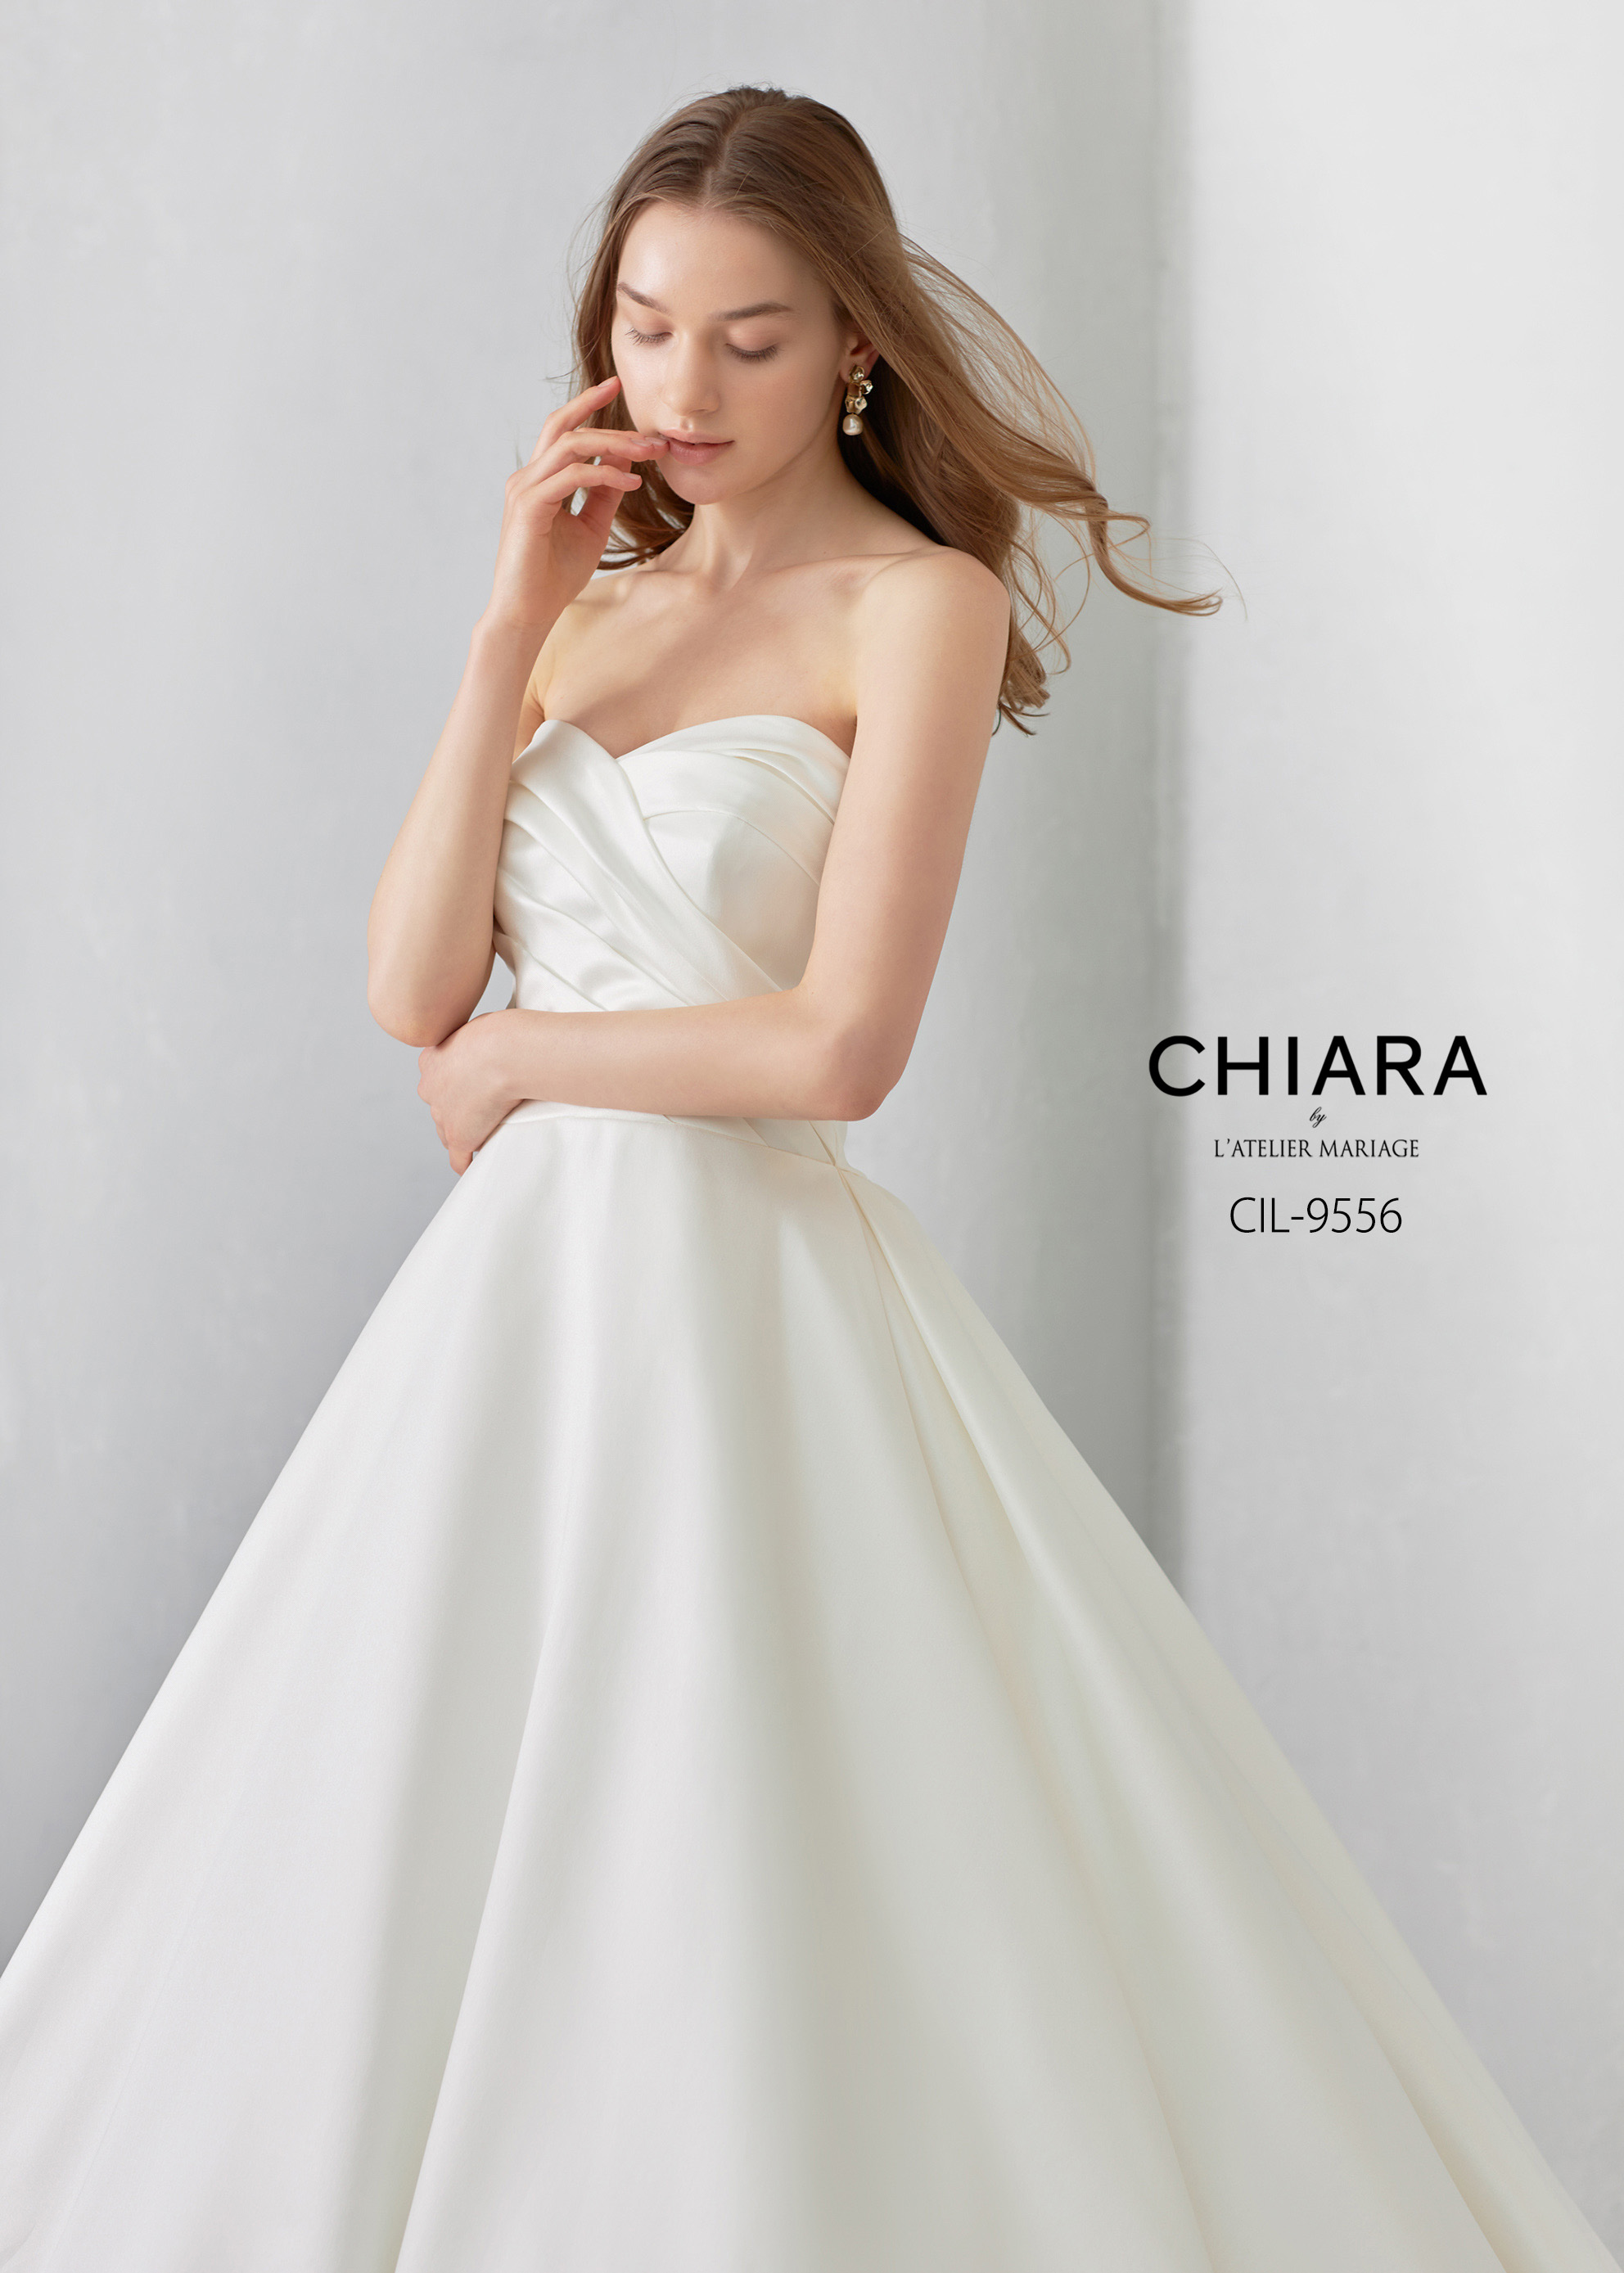 CHIARA latflier mariage ウエディングドレス